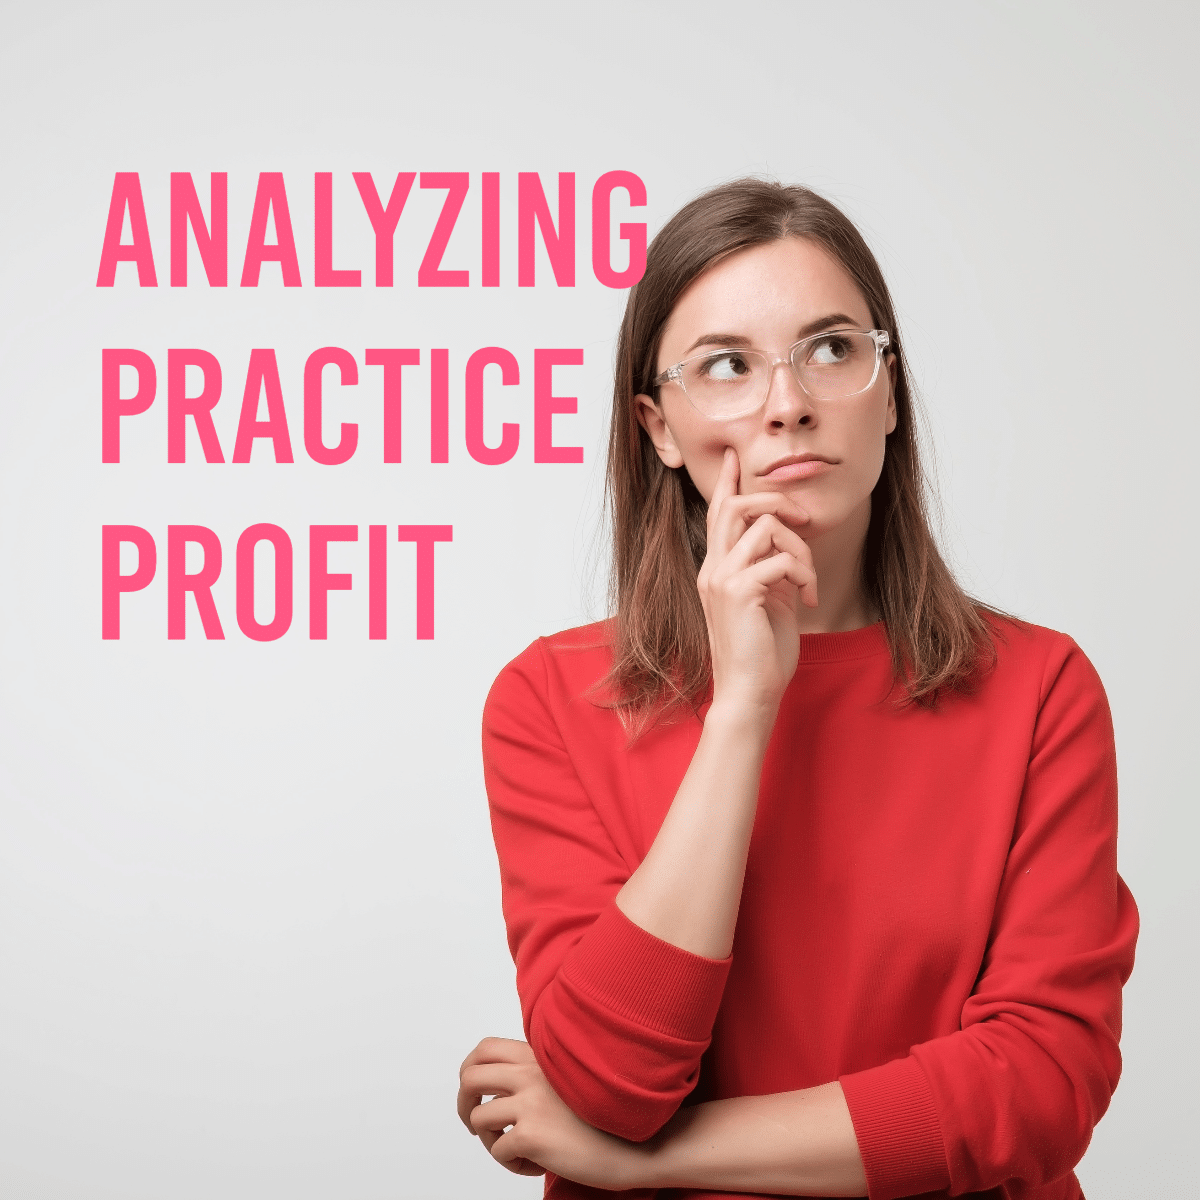 5 Strategies to Analyze Profitability in Your Practice